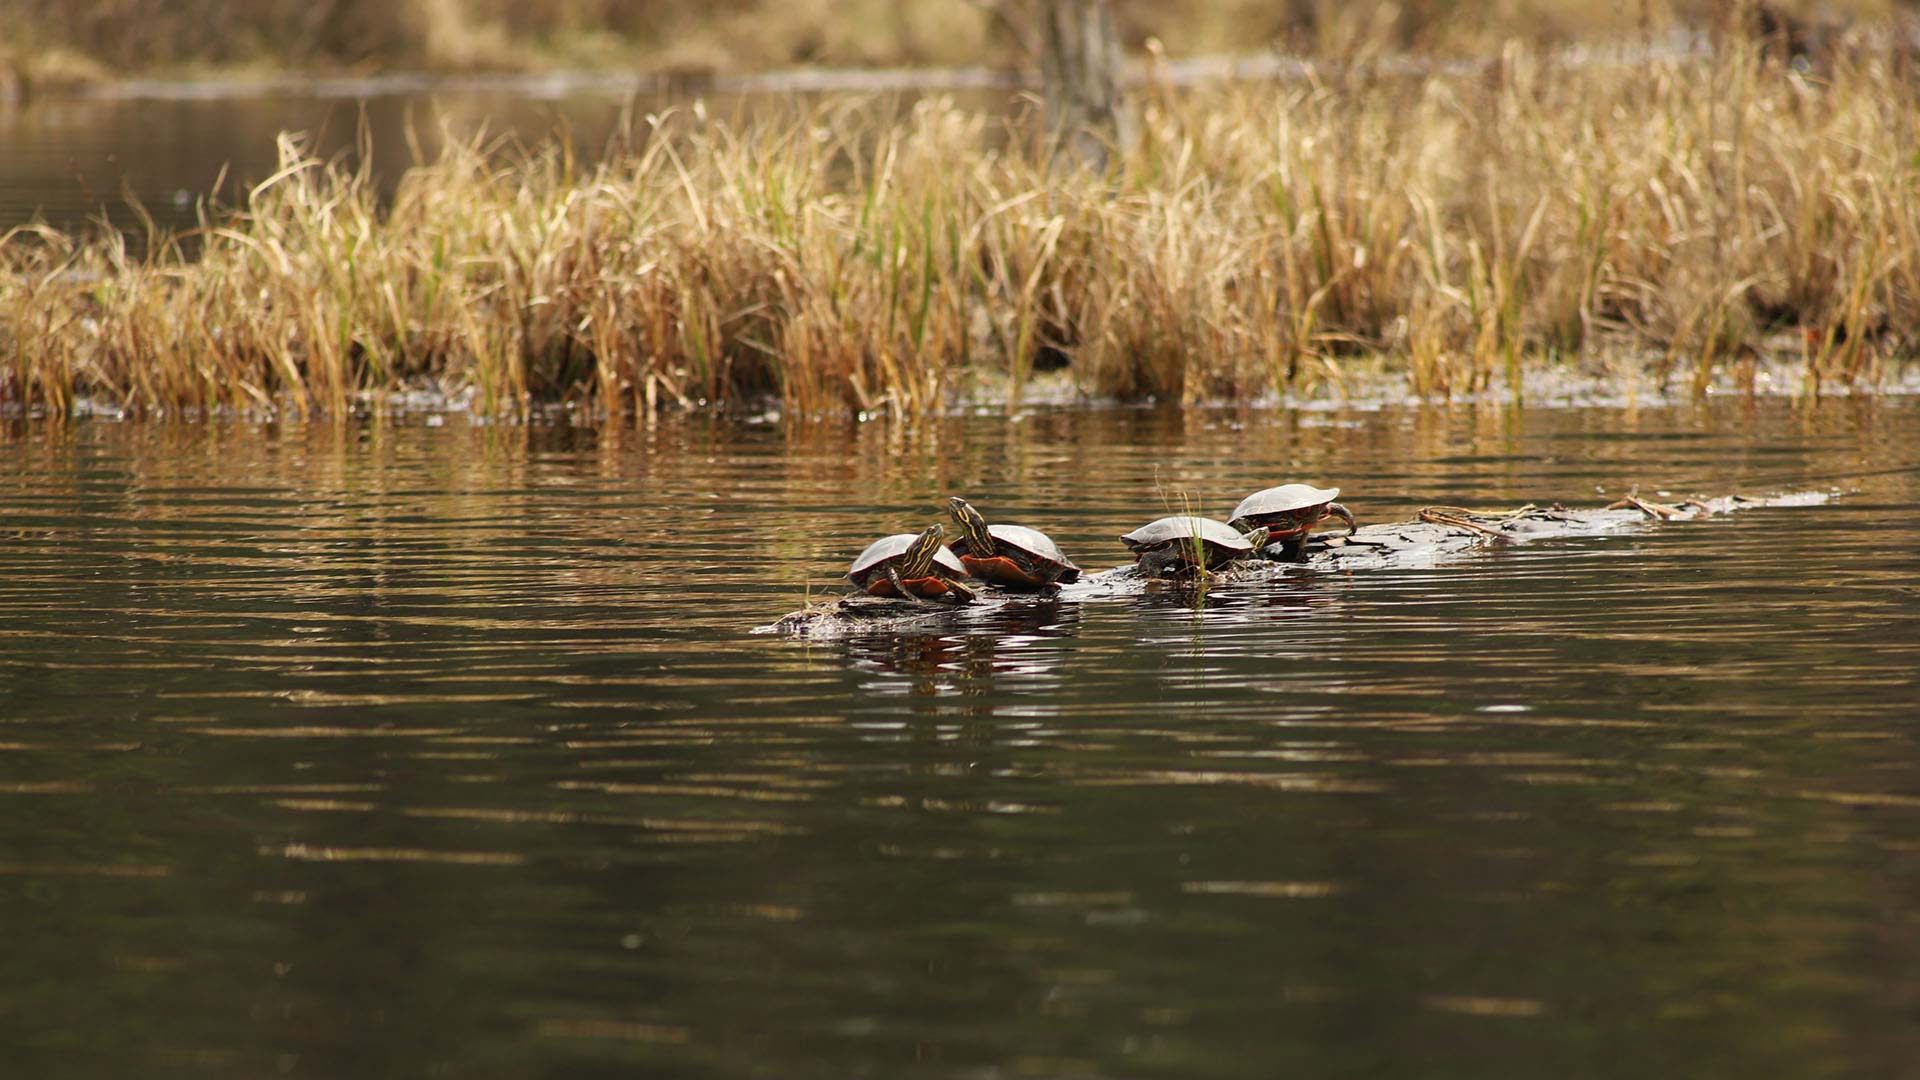 Turtles gathered on a log